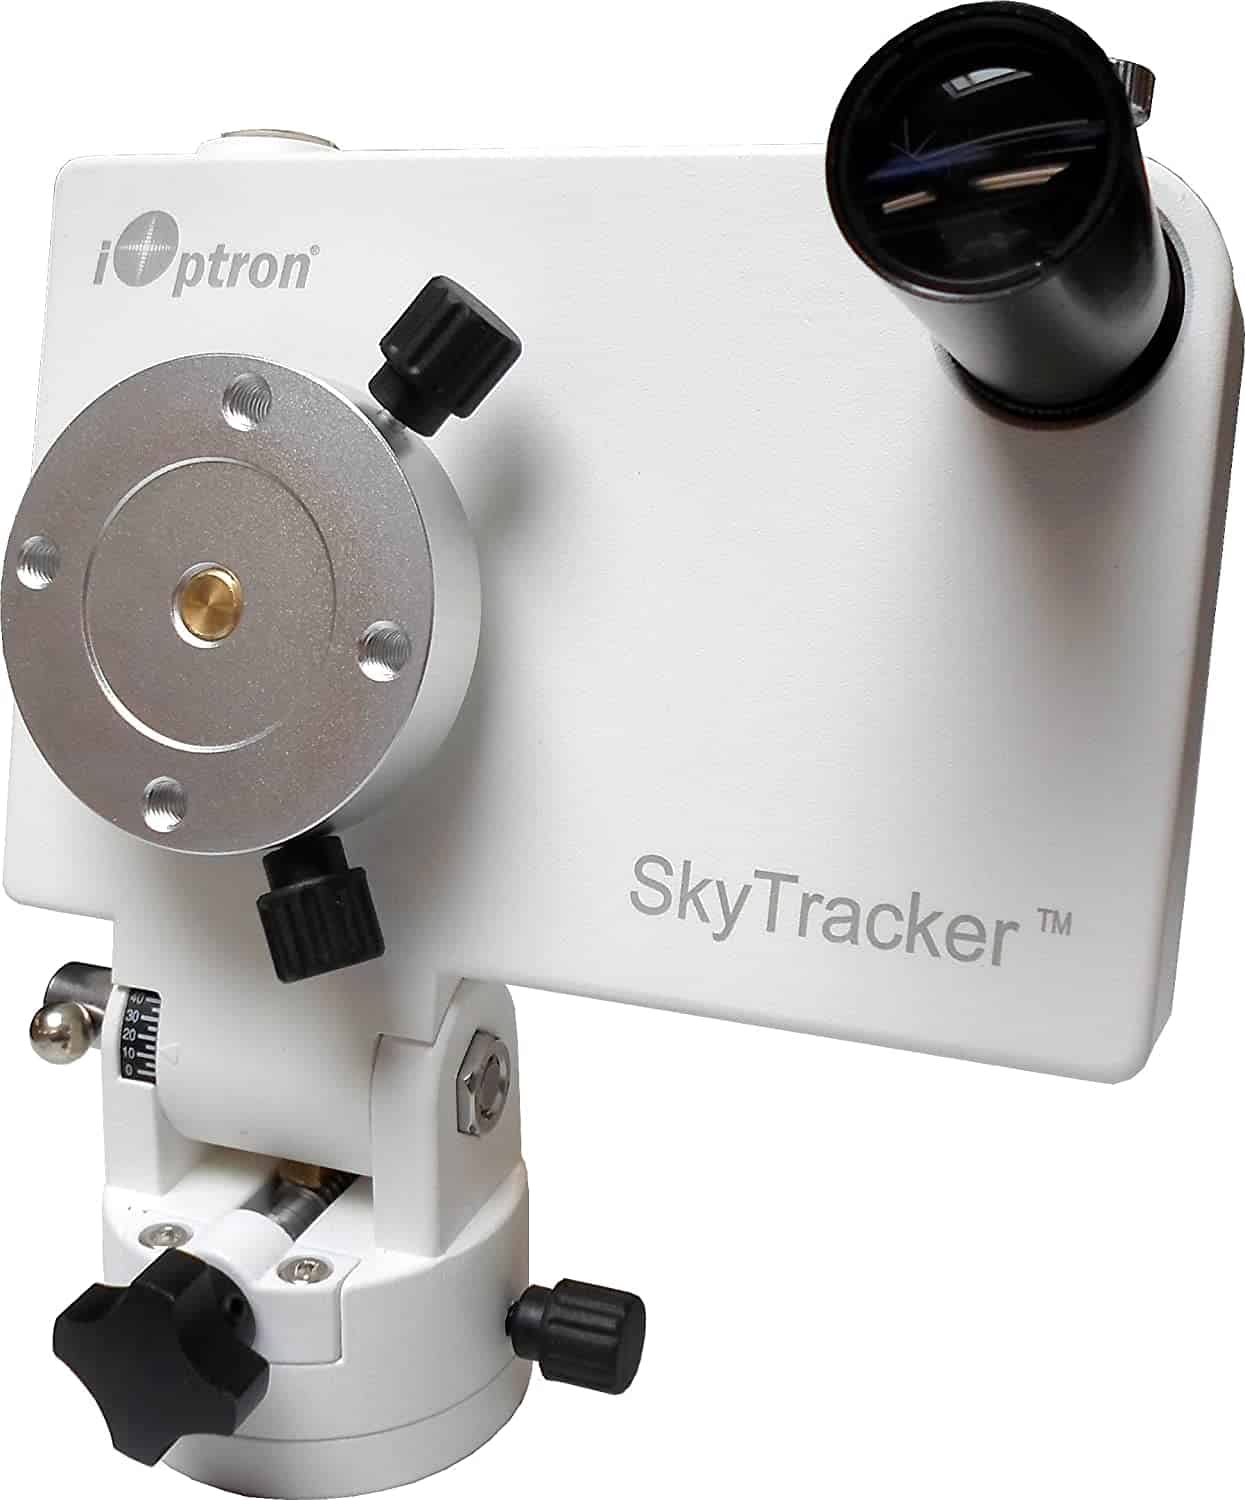 iOptron SkyTracker Pro